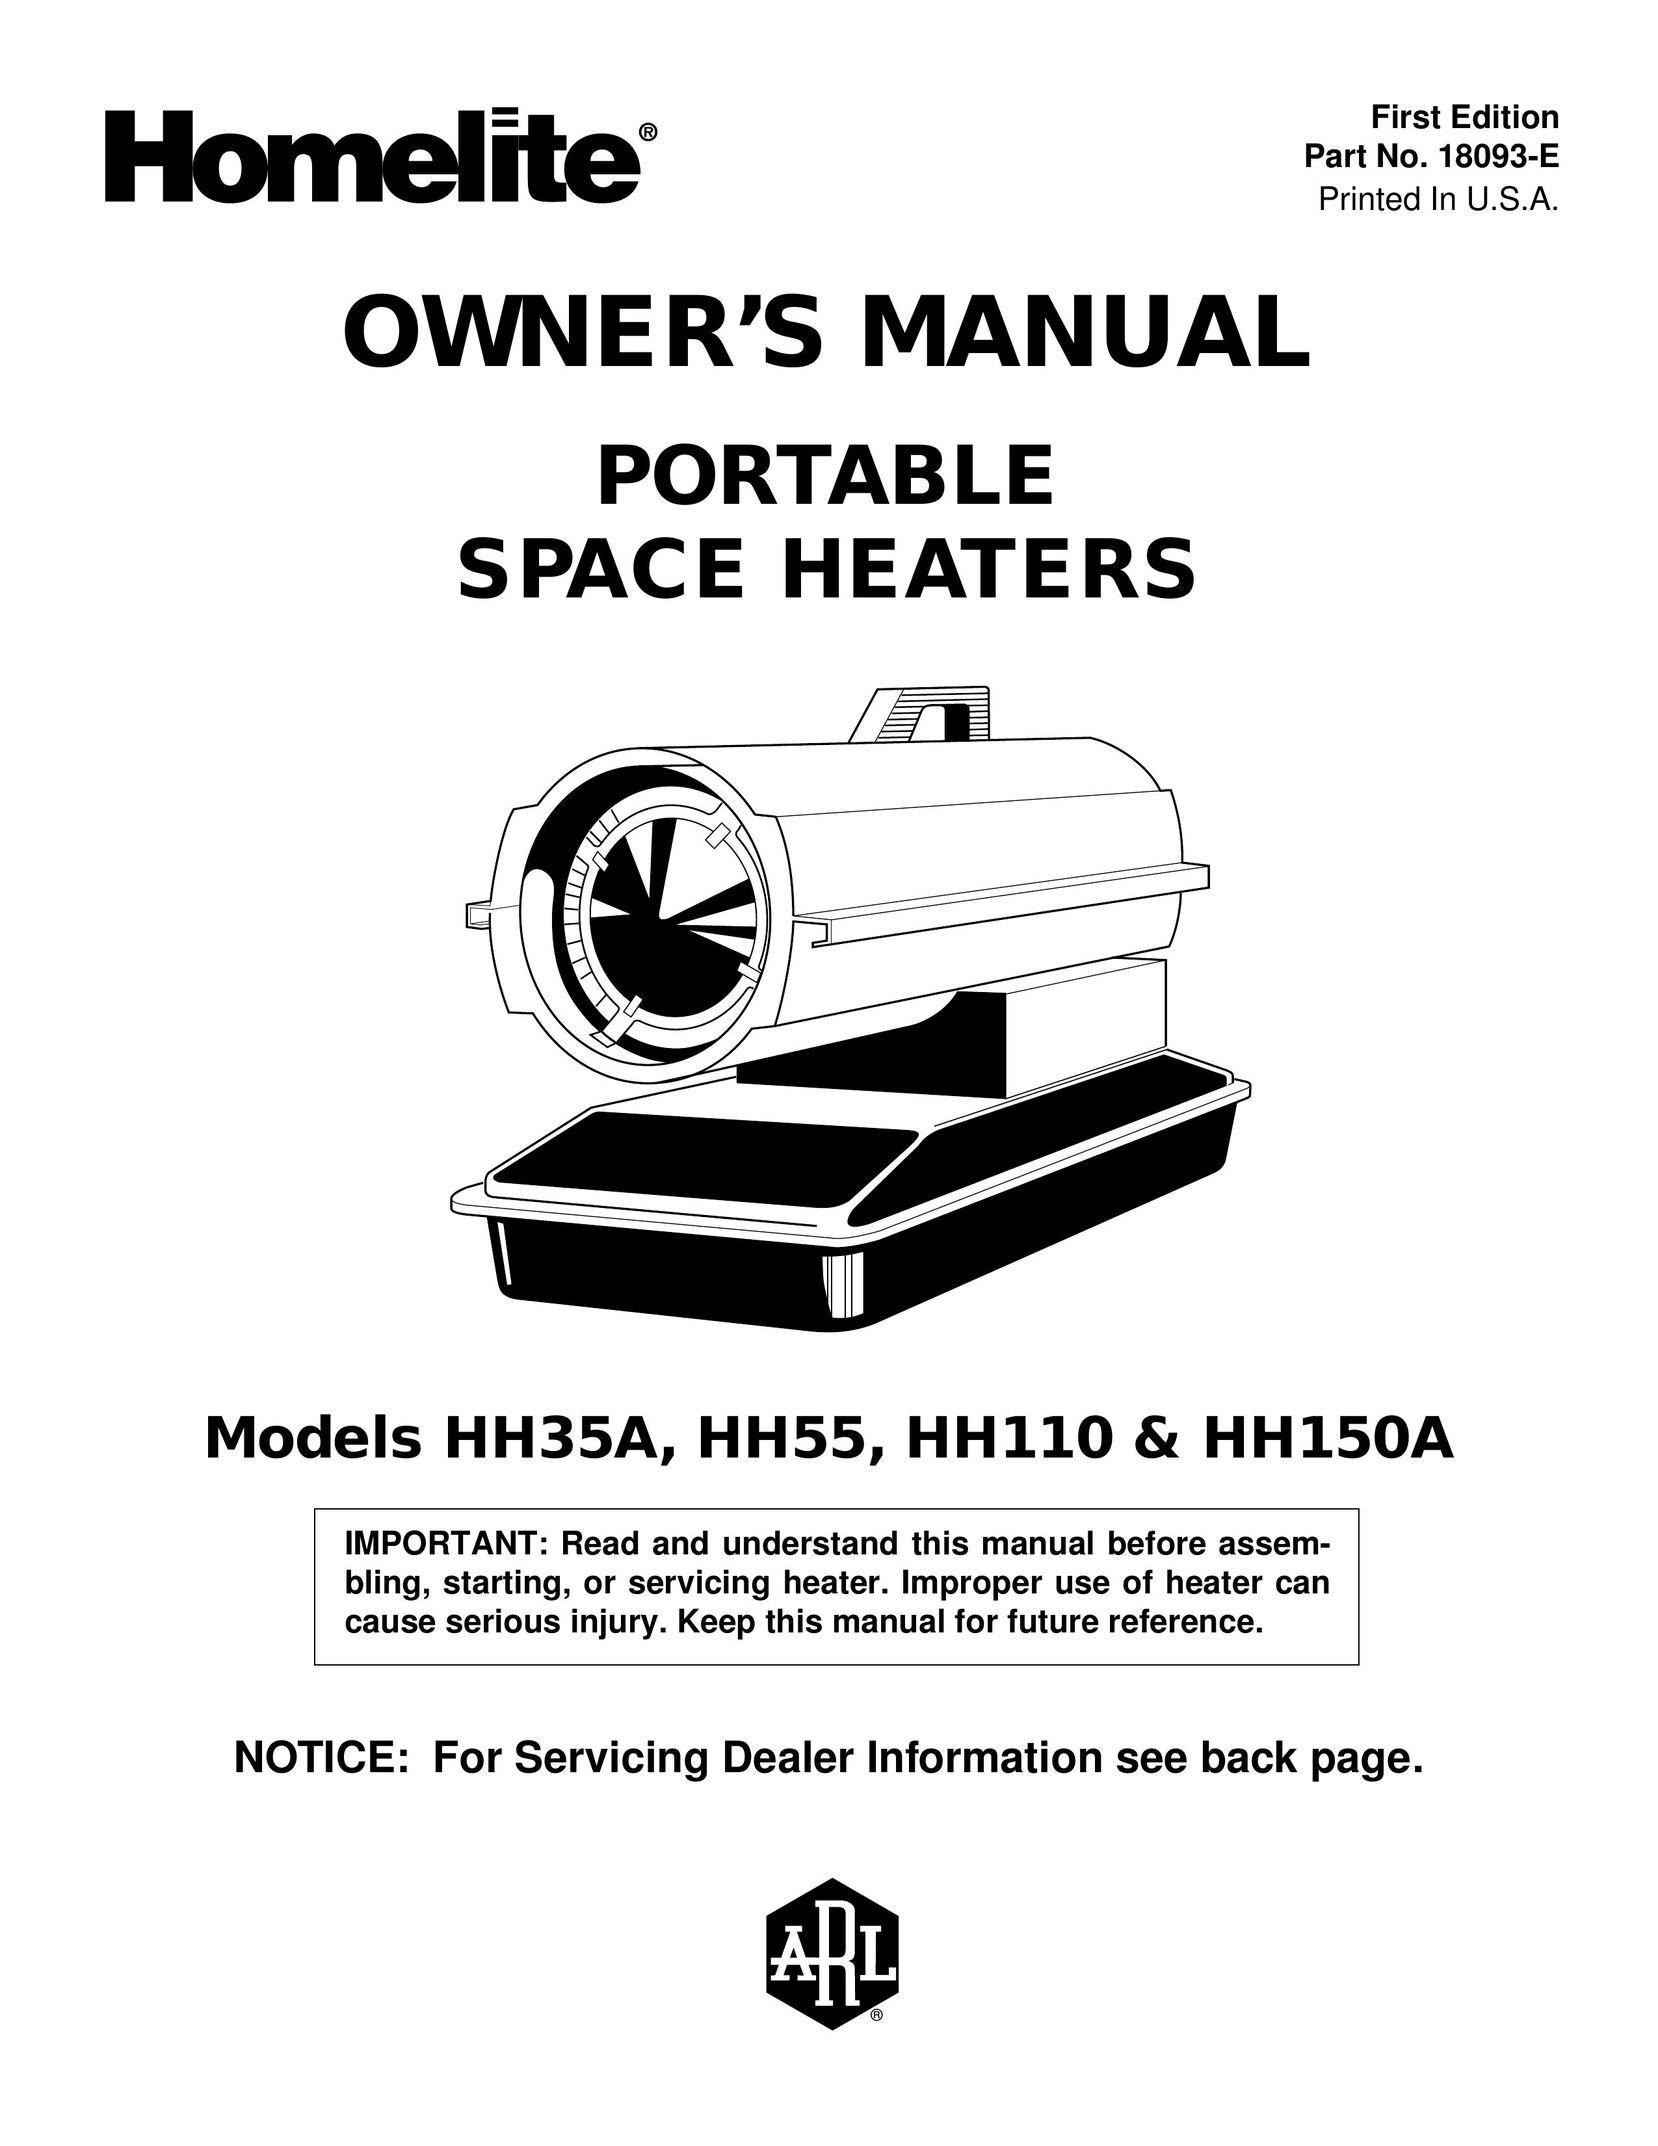 Homelite HH35A Electric Heater User Manual